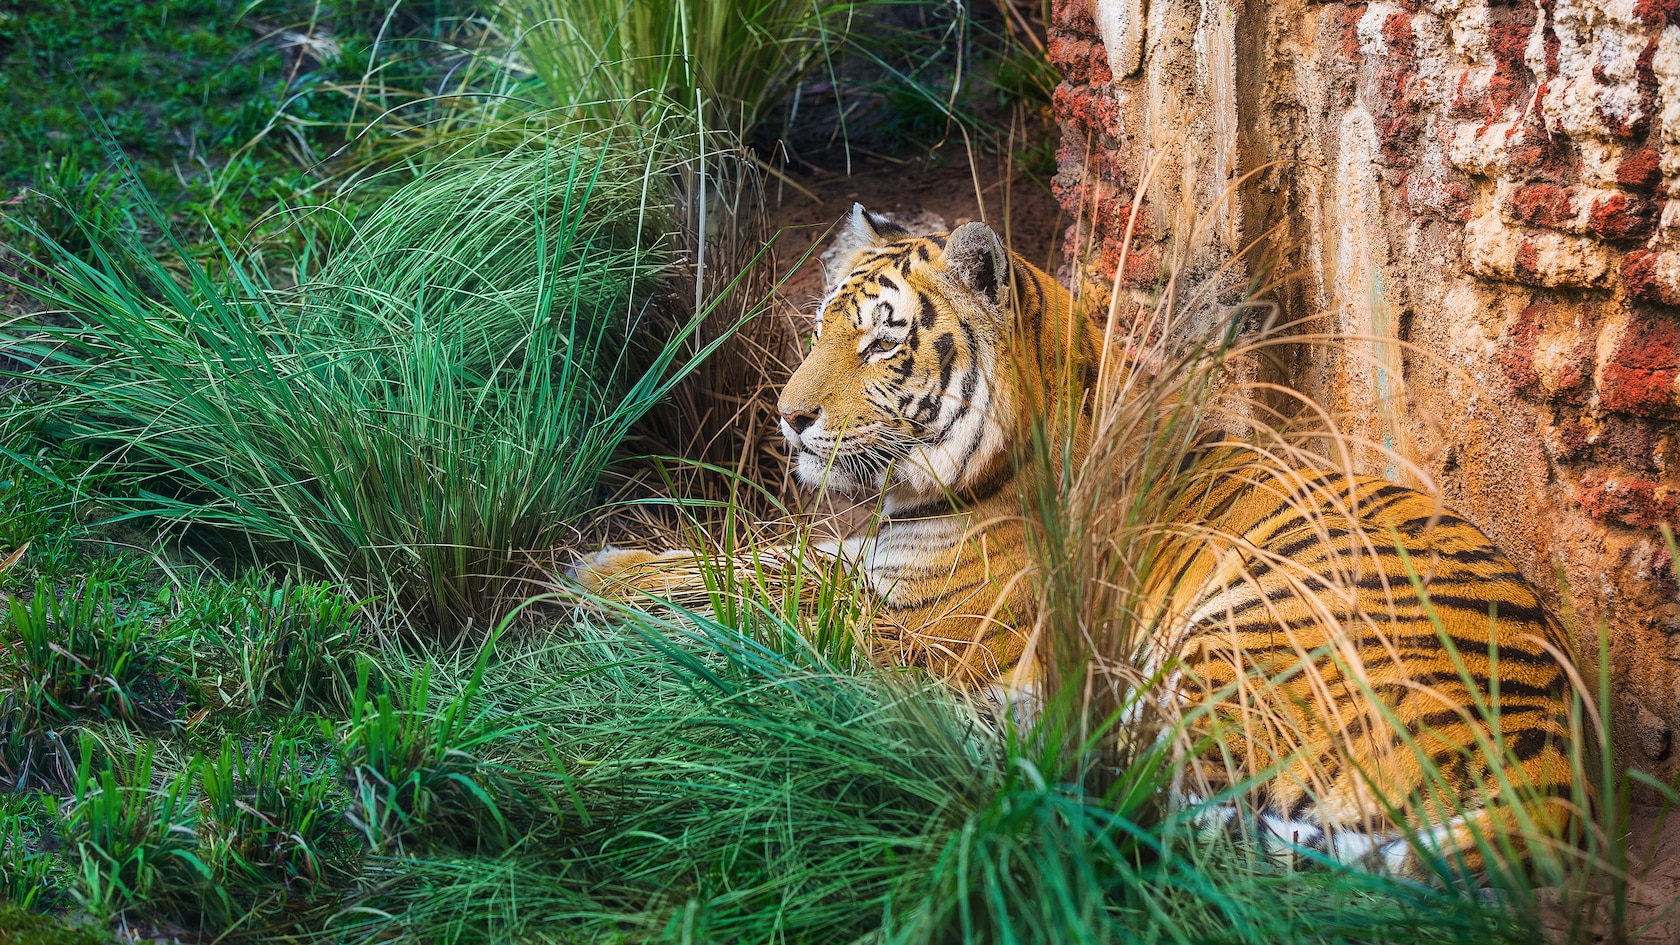 Maharajah Jungle Trek Animal Kingdom Attractions Walt Disney World Resort